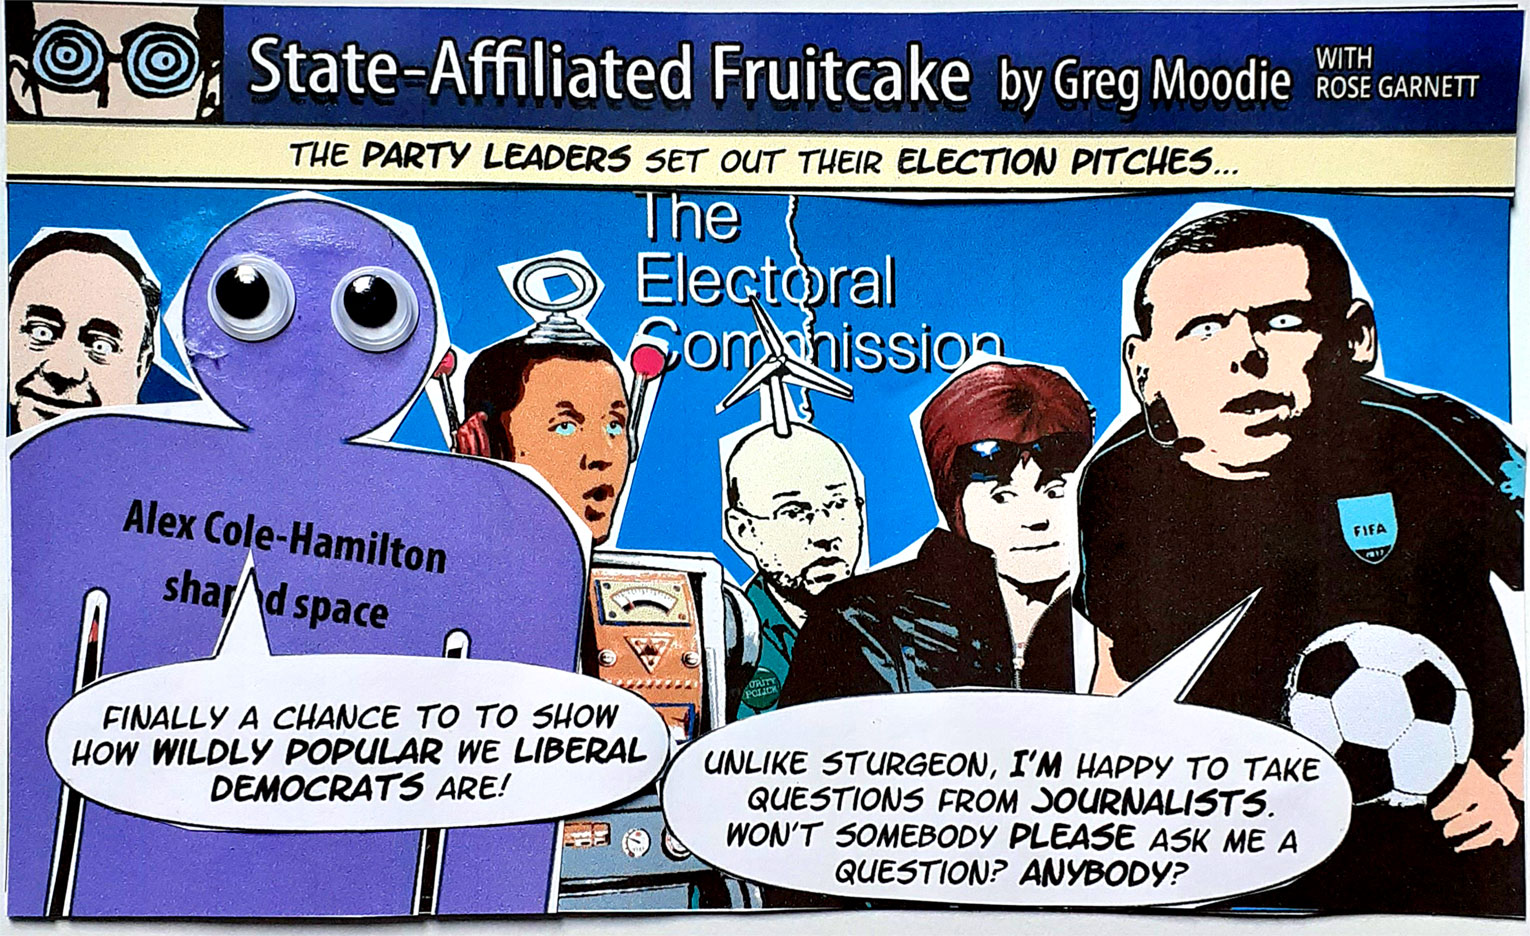 State-Affiliated Fruitcake